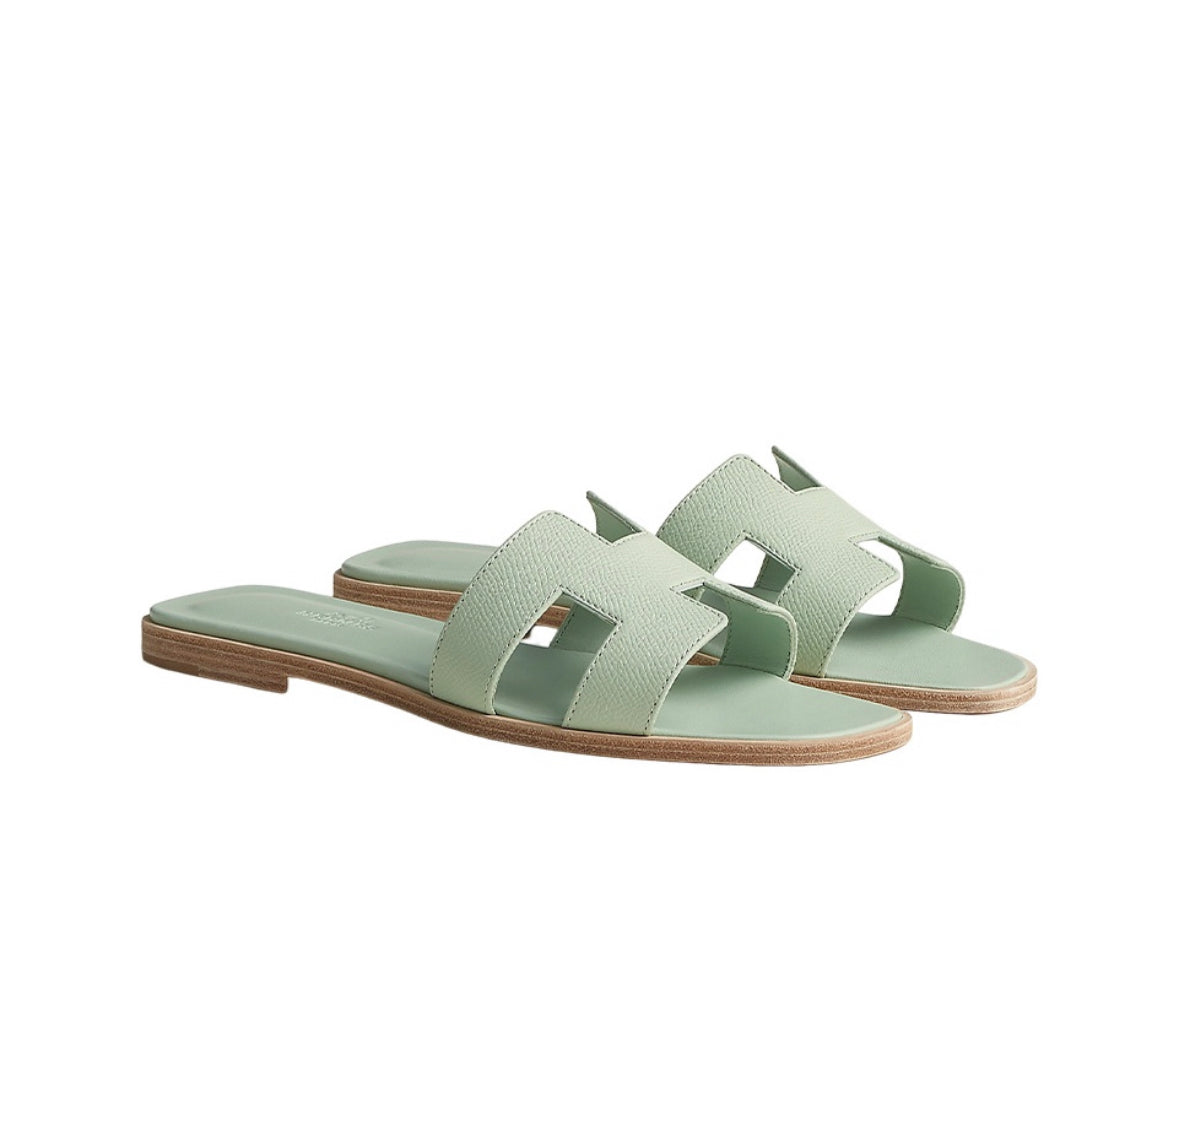 Hermes Oran Sandals “Green”